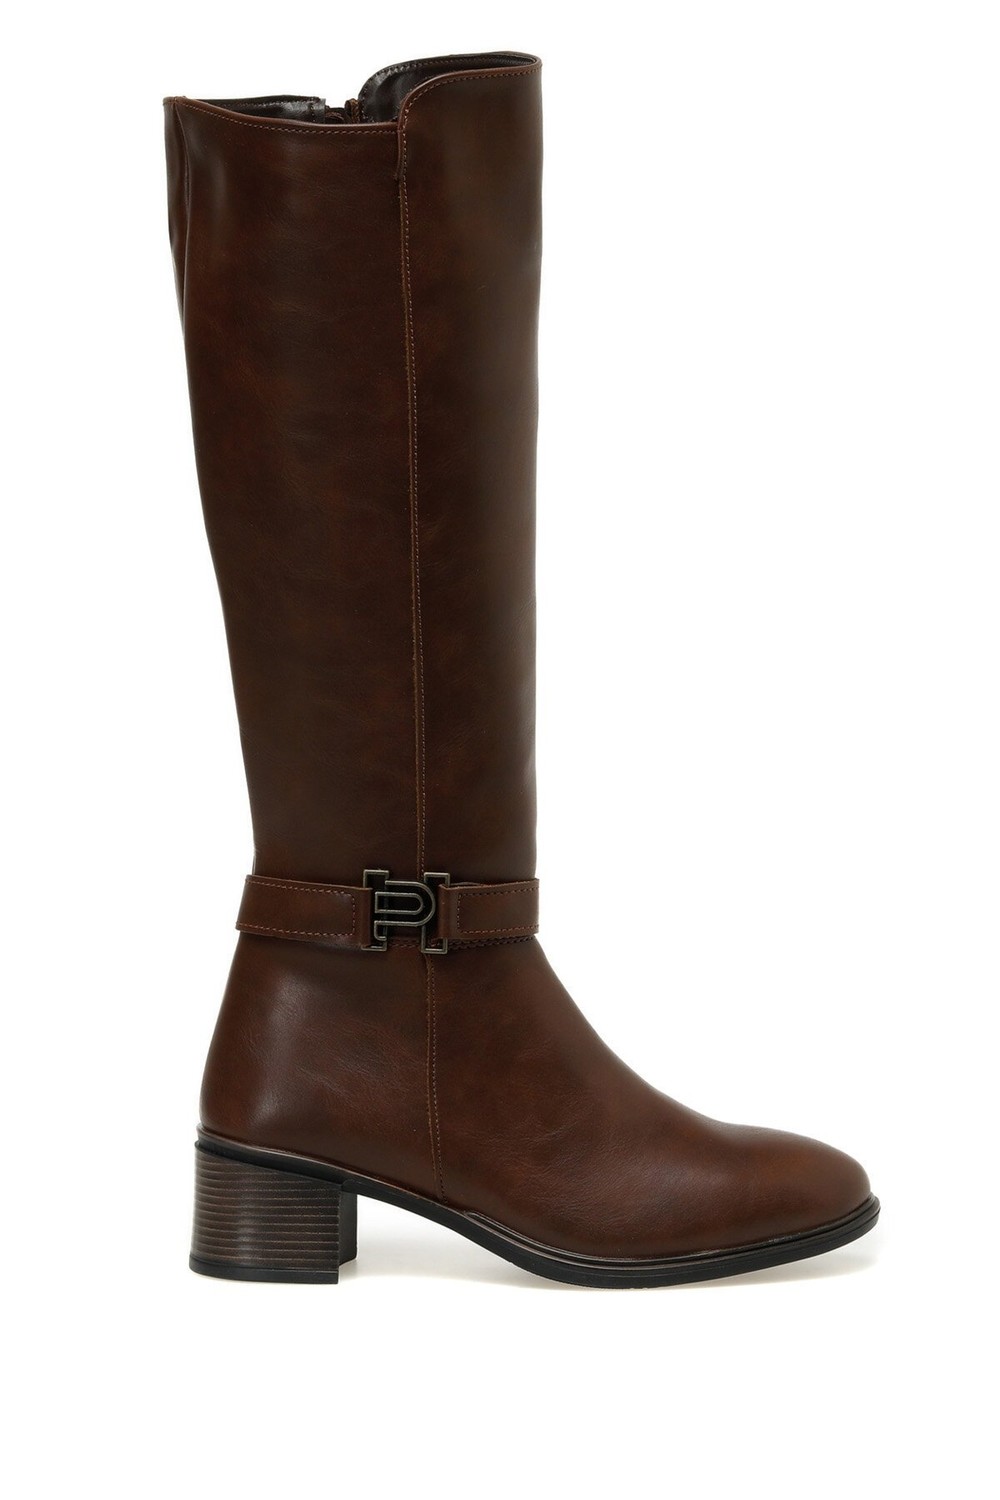 Polaris 320236.z 2pr Women's Brown Heeled Boots